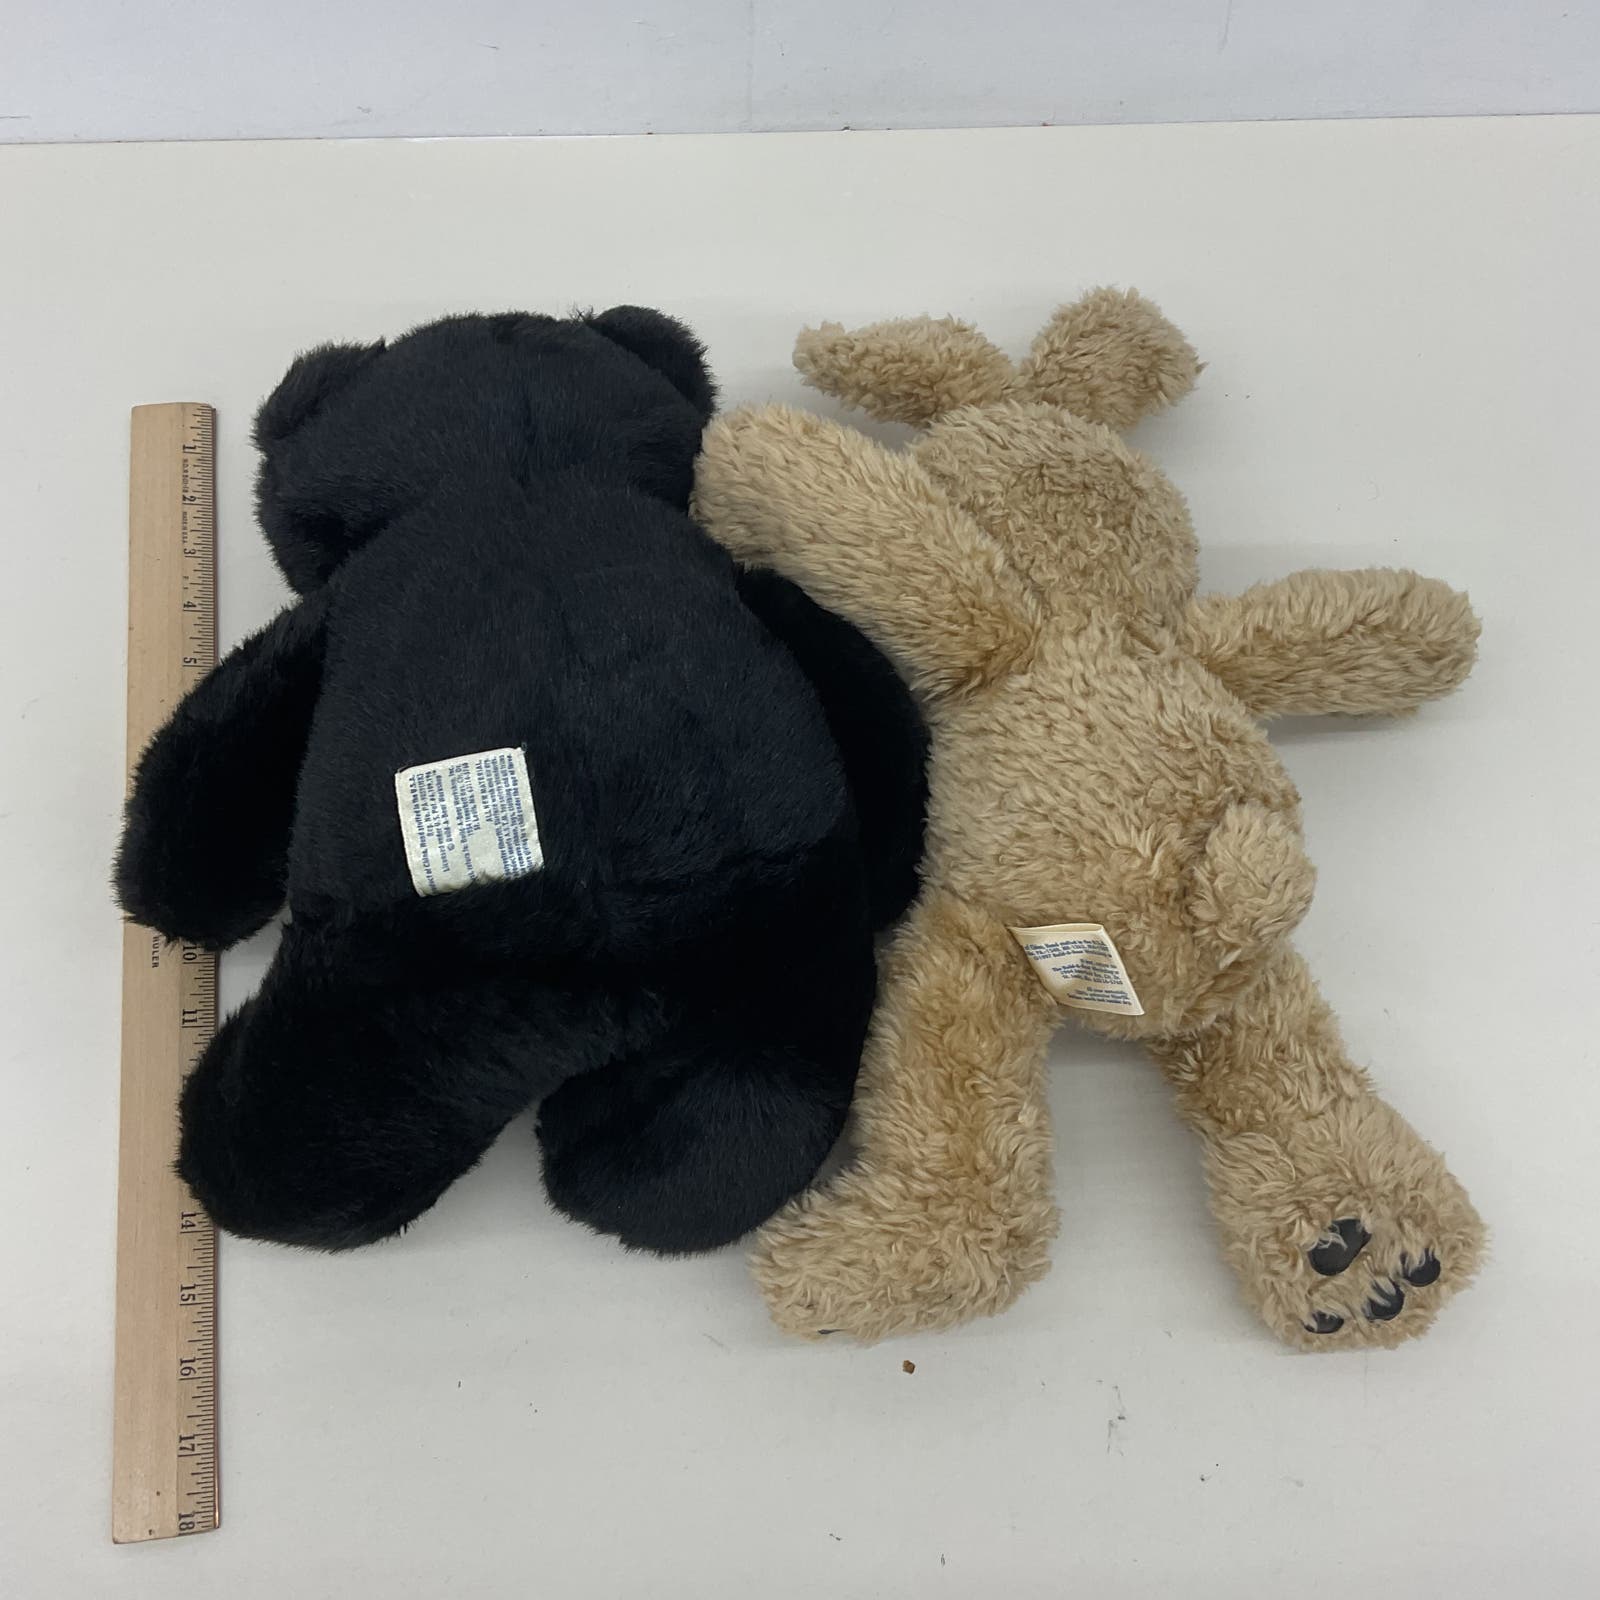 Preowned Build A Bear Workshop BABW Brown Bunny Rabbit & Black Teddy Bear Plush - Warehouse Toys